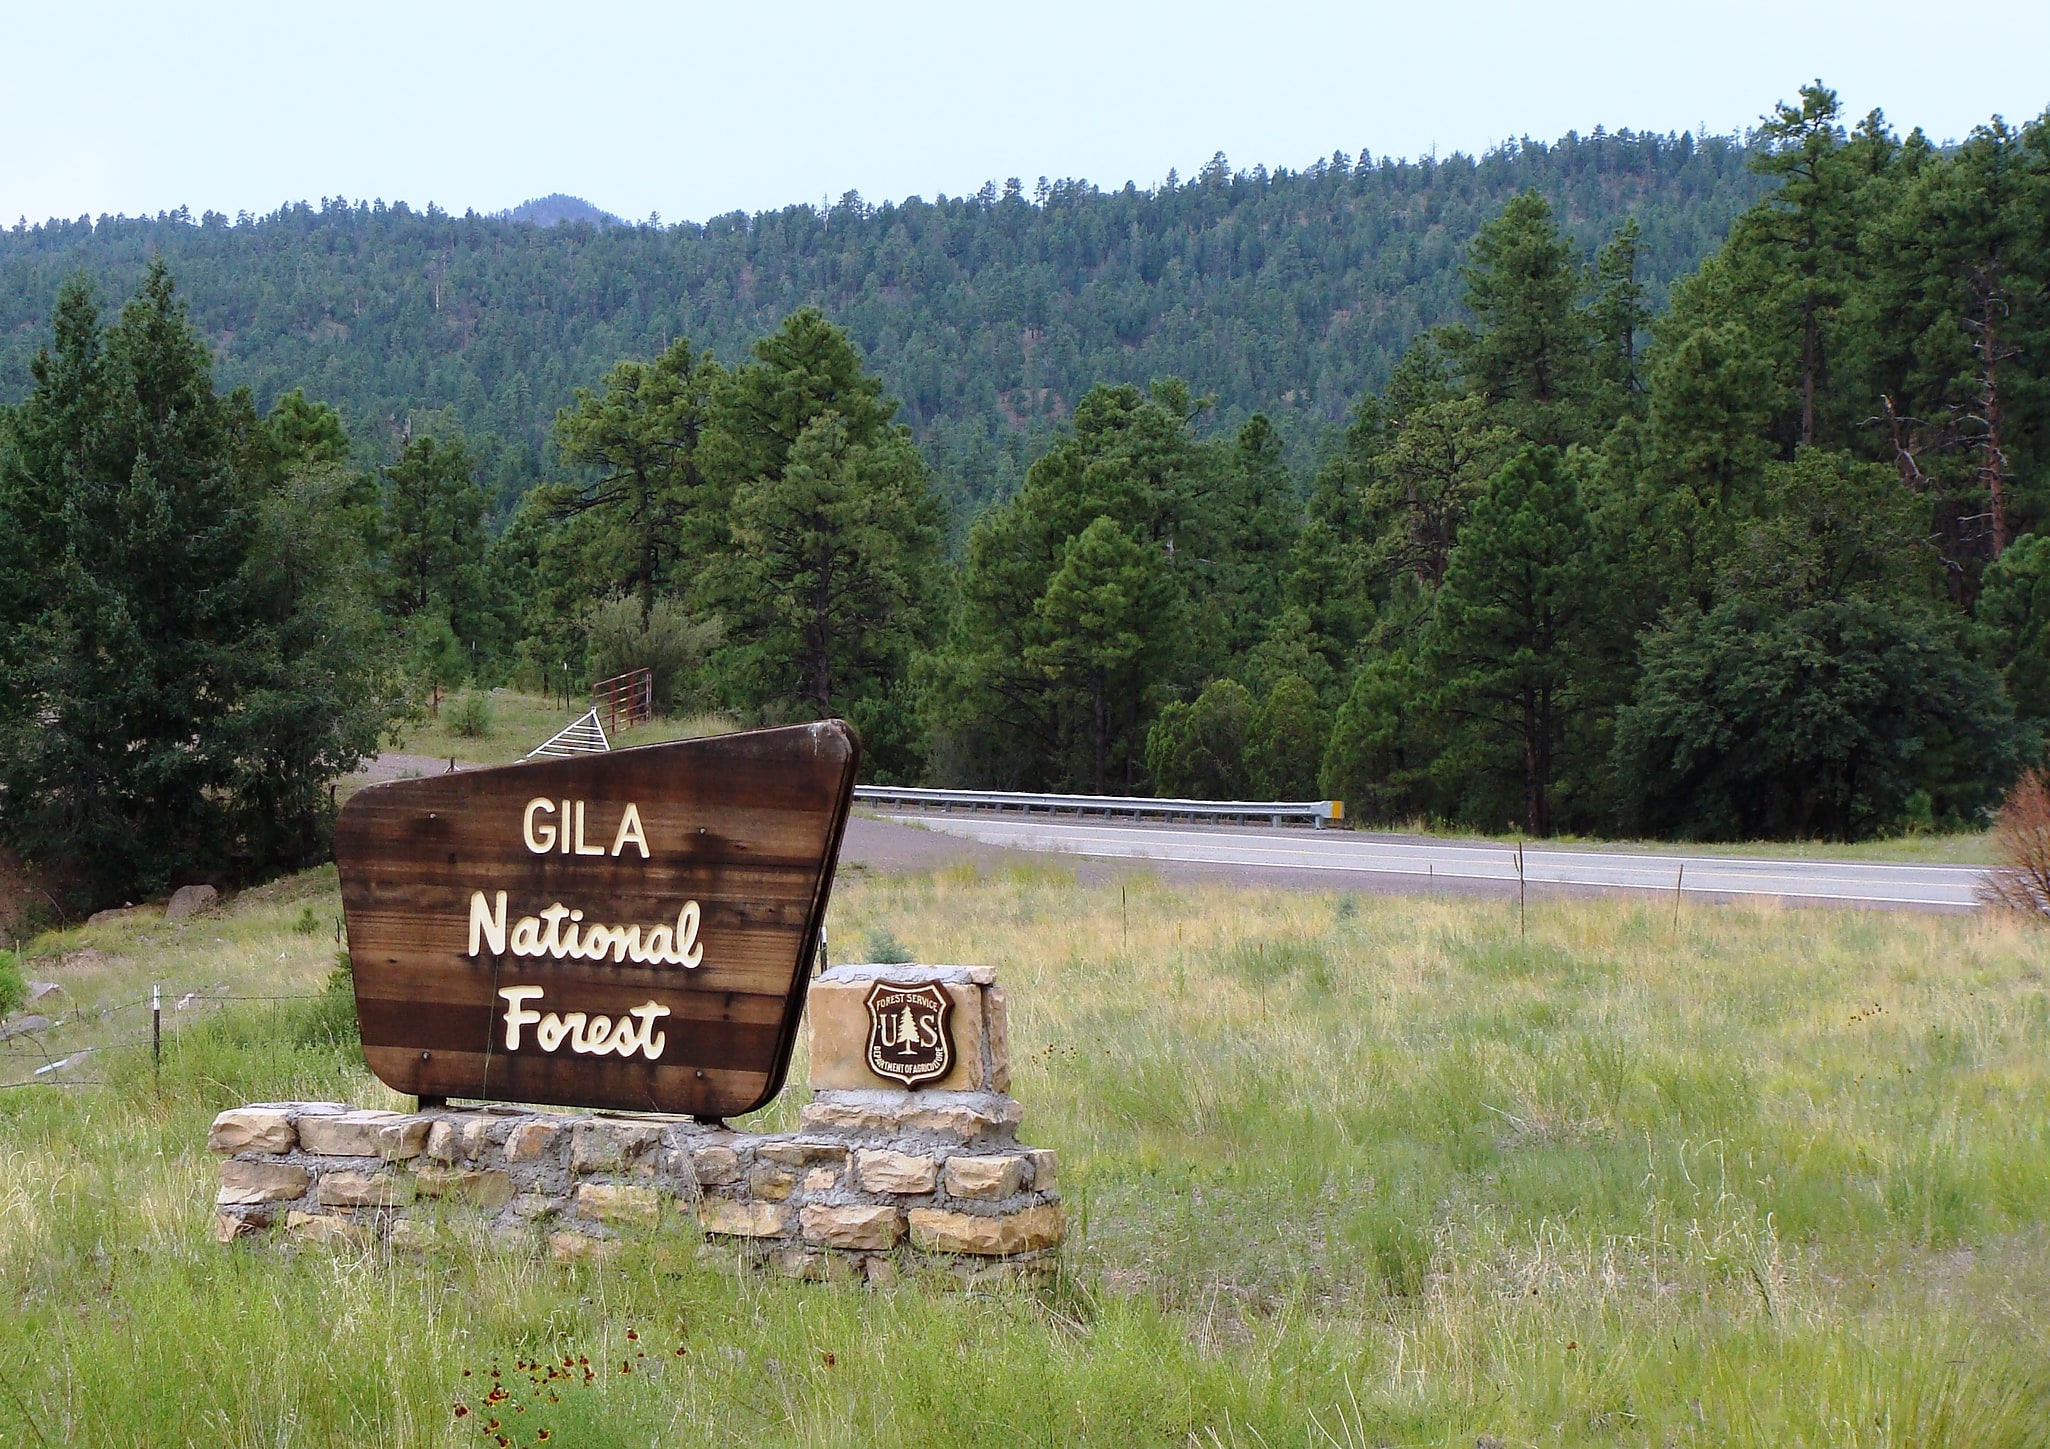 Gila National Forest, United States